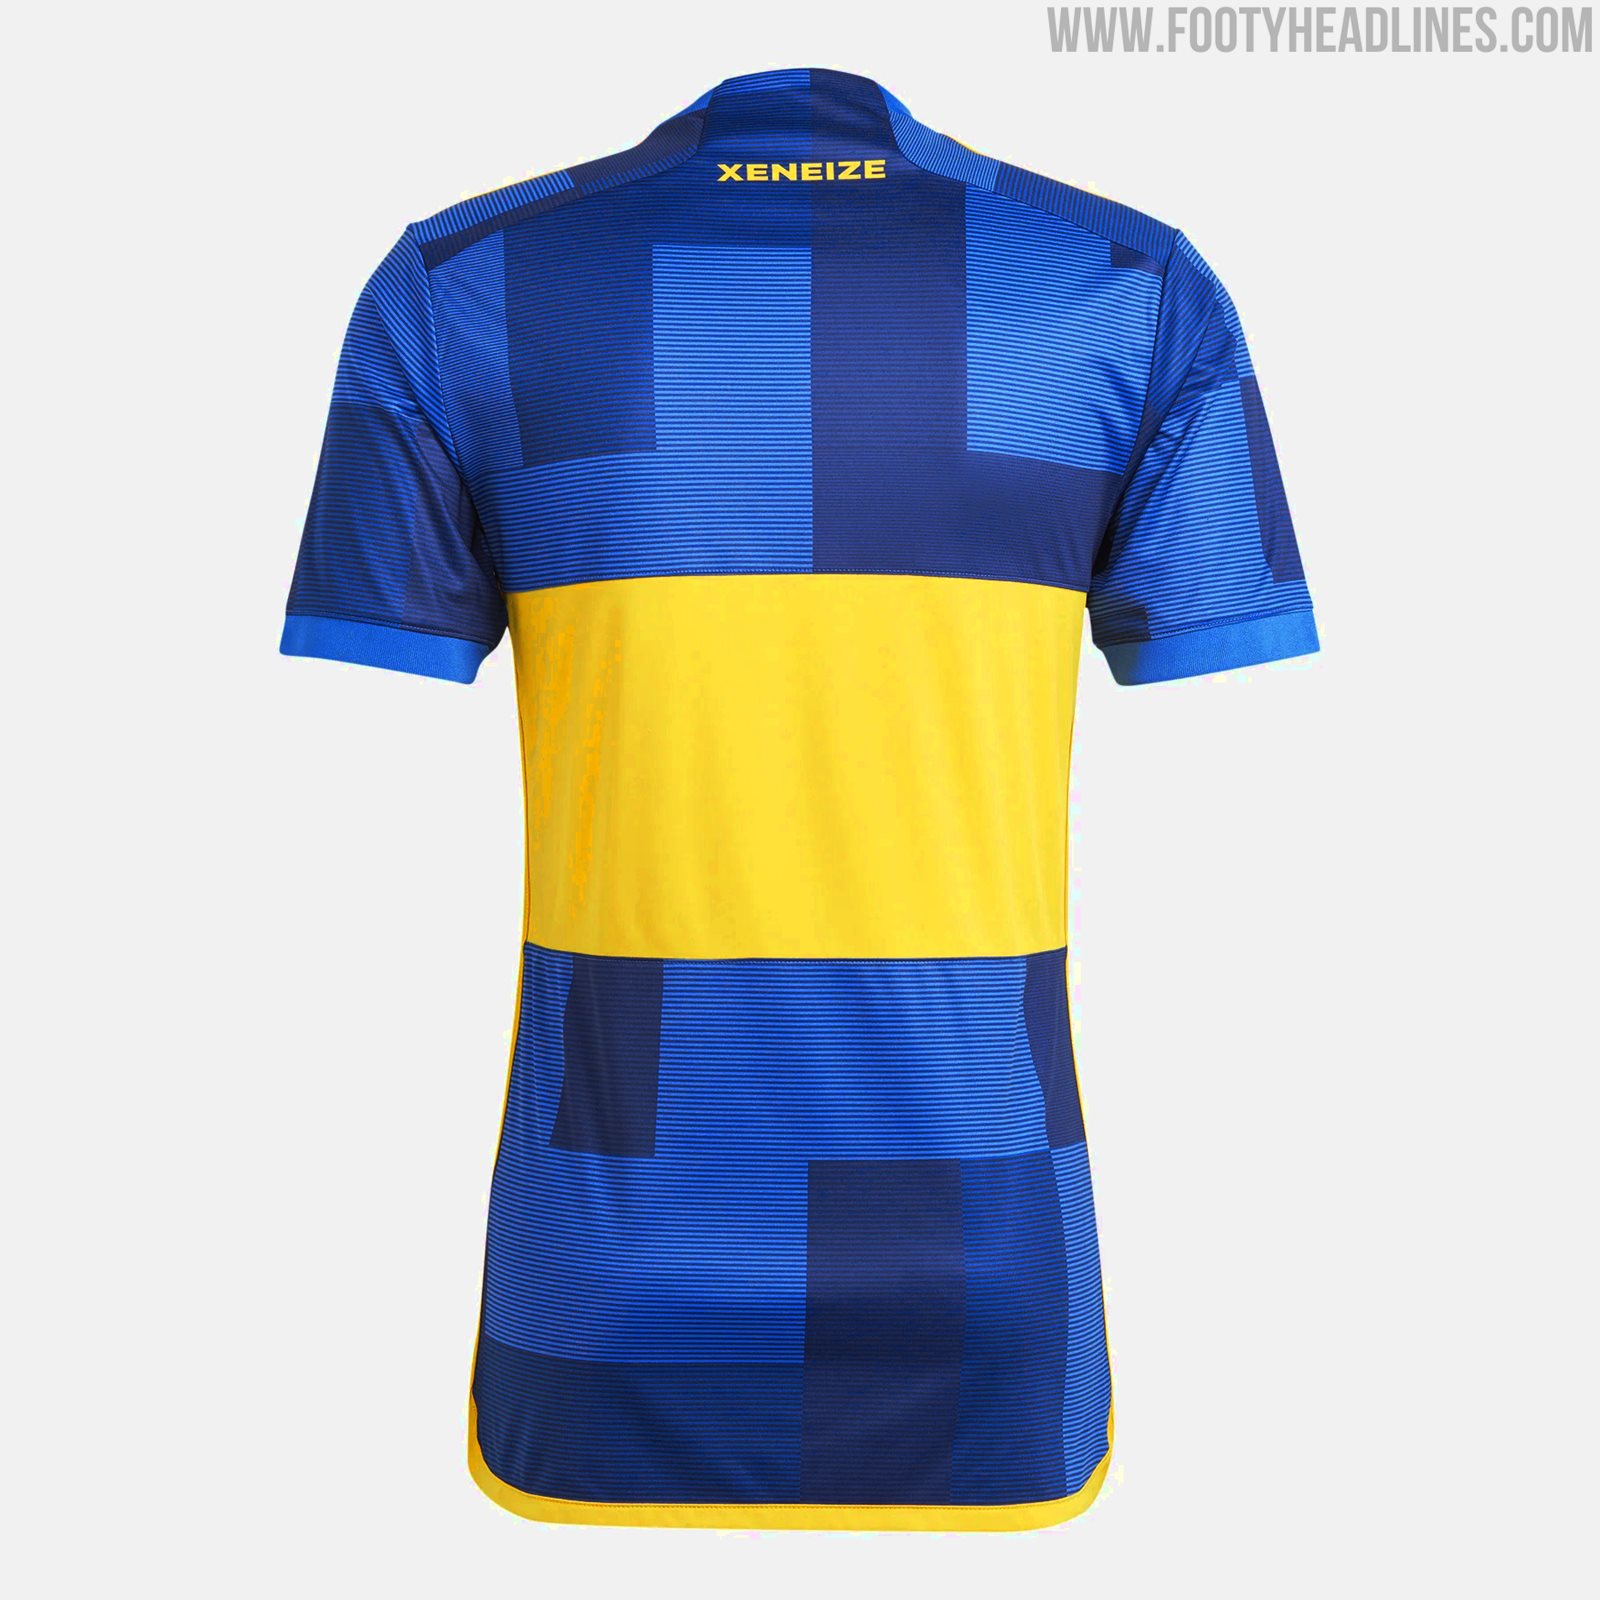 Boca Juniors 22-23 Home Kit Released - Footy Headlines